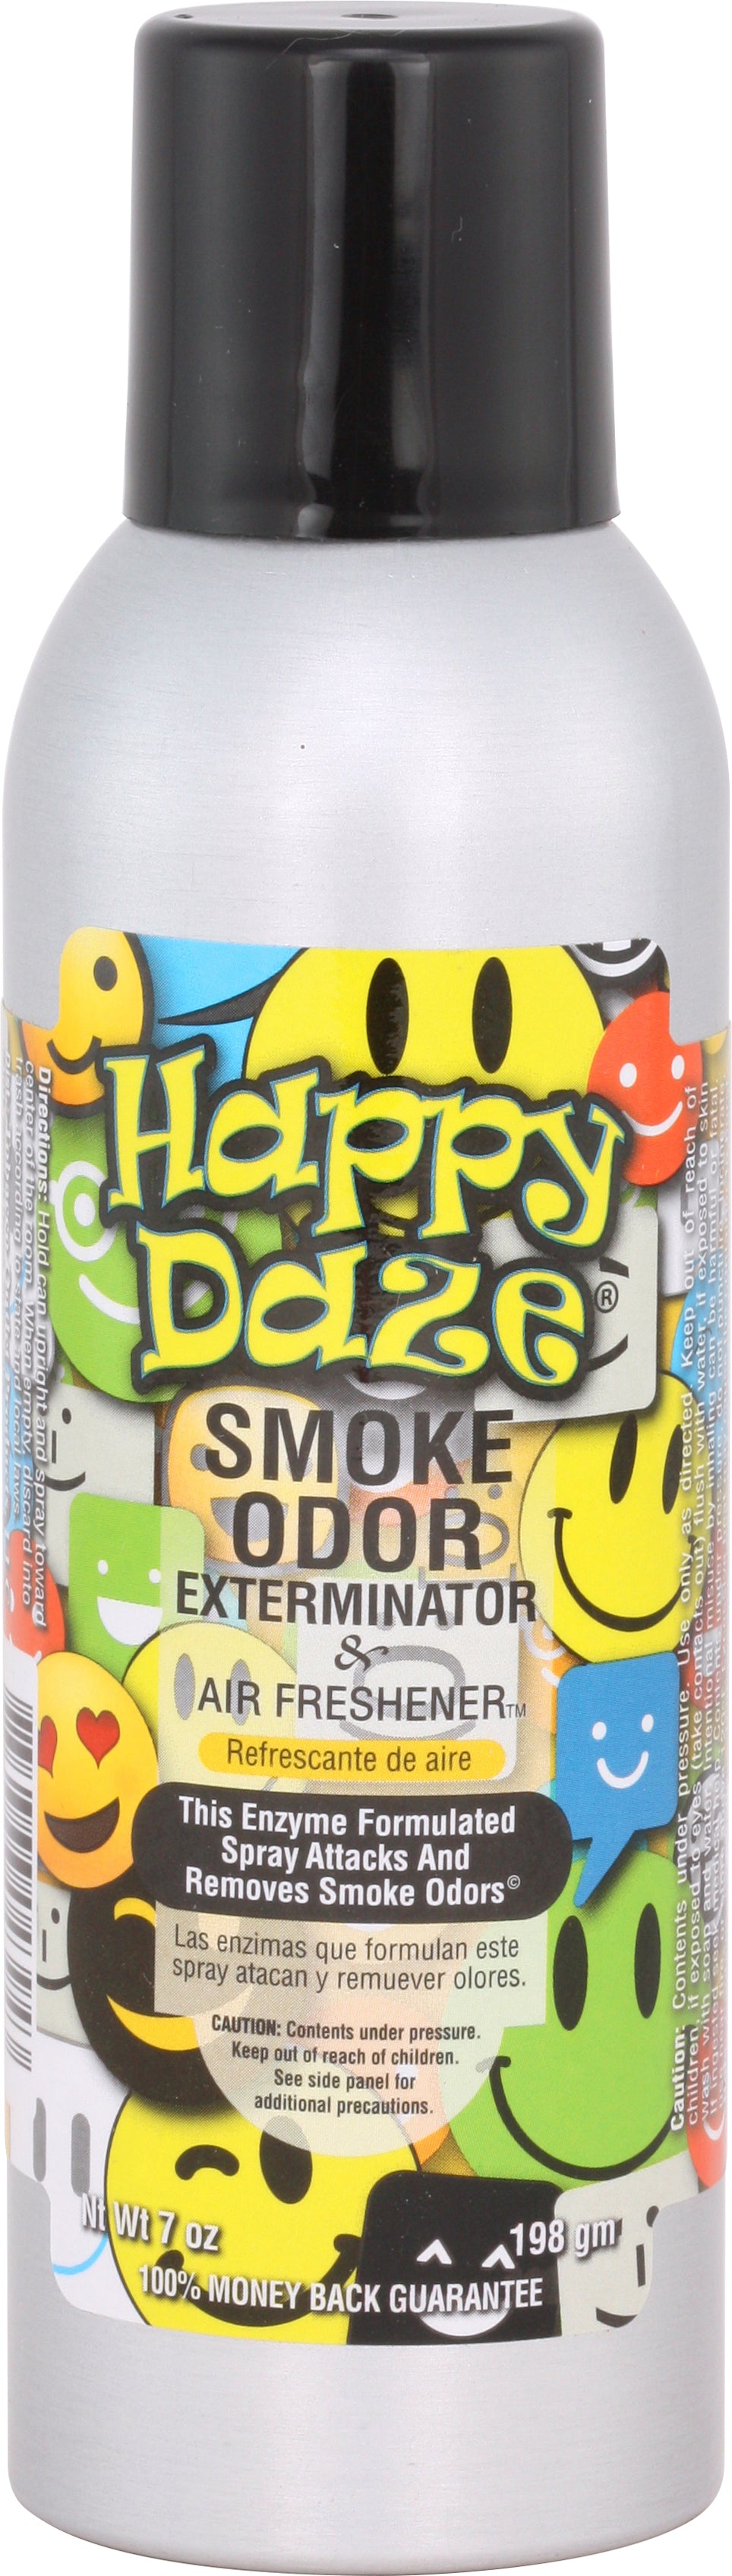 Smoke Odor 7 Oz. Spray: Happy Daze